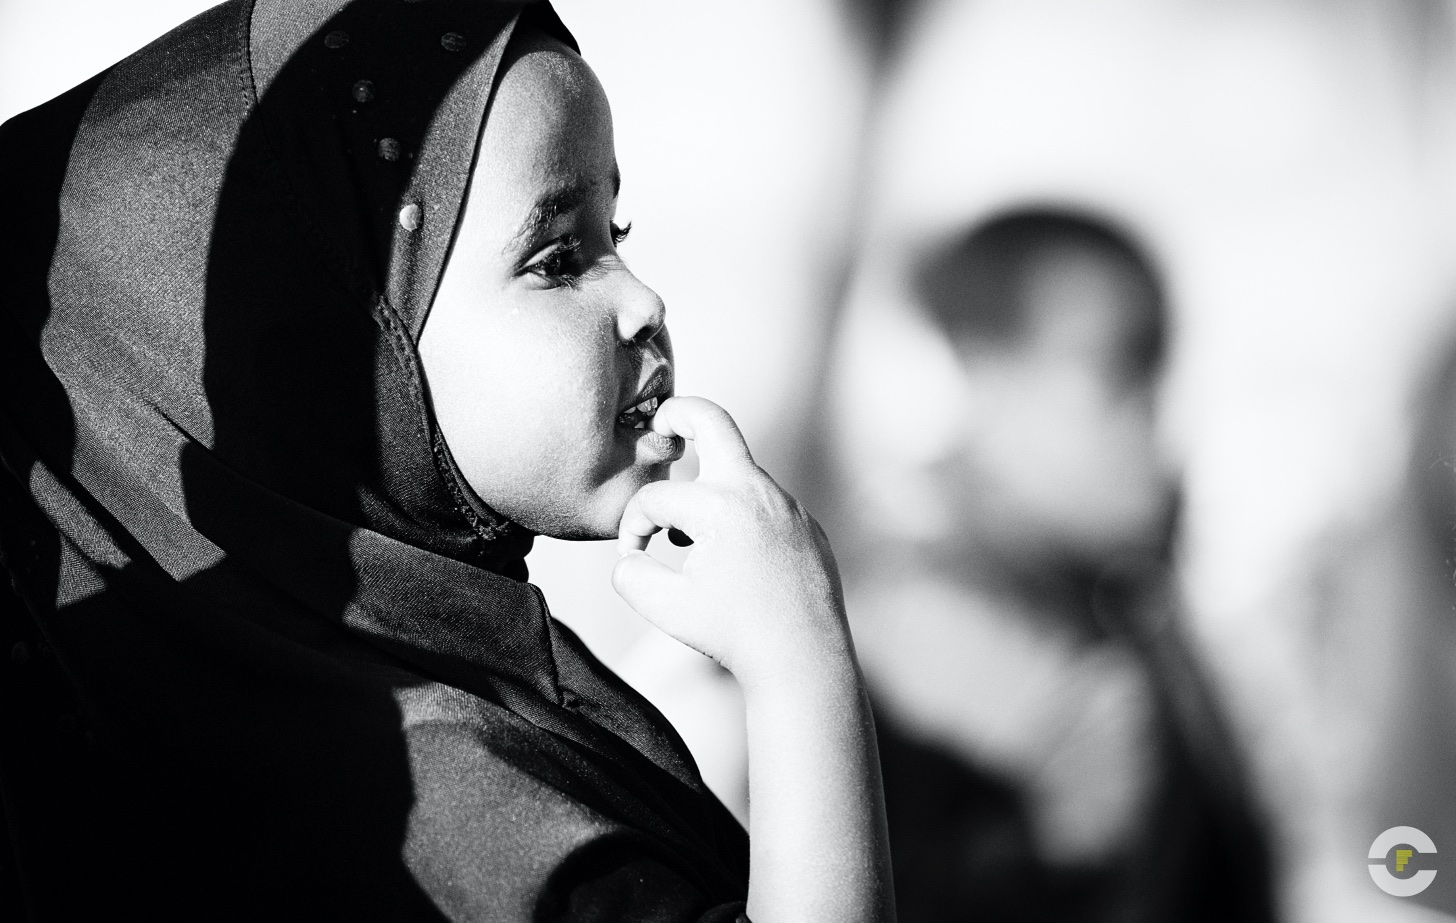 Somalia / Mogadiscio / 2015